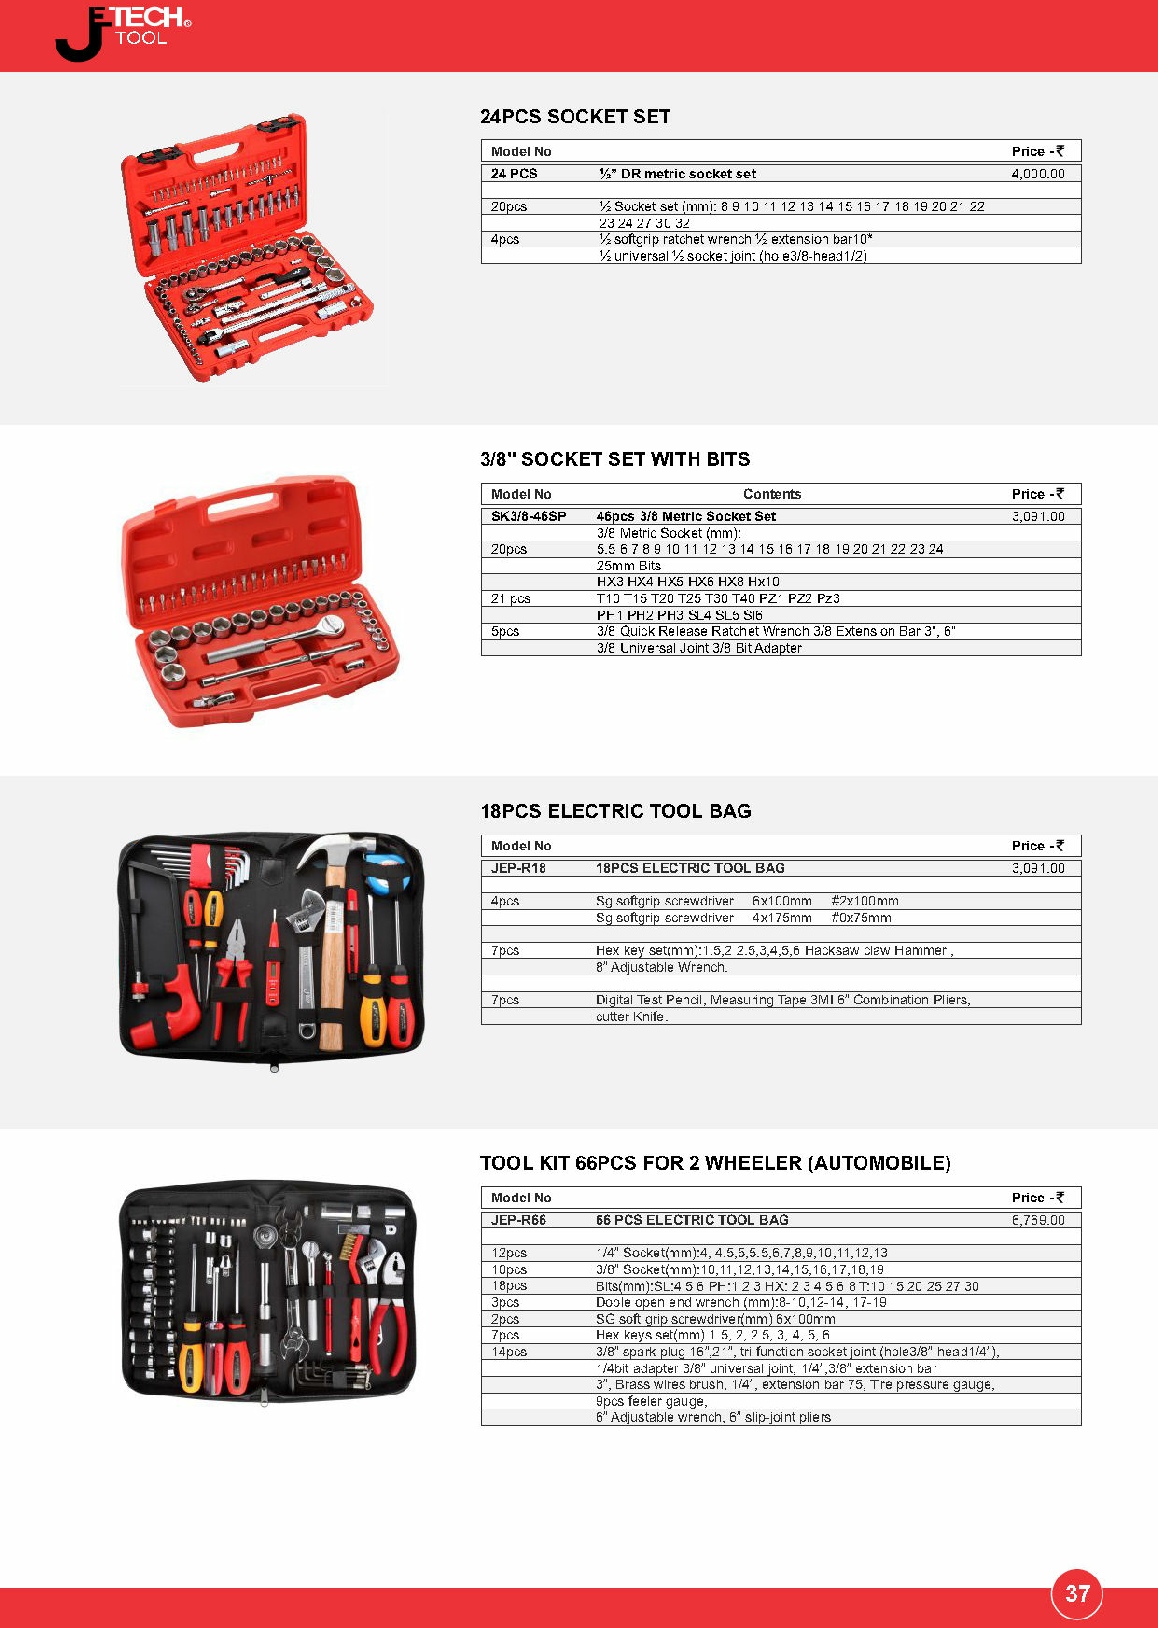 socket set,electric tool bag,toolkit for two wheeler,jetech tools,chennai